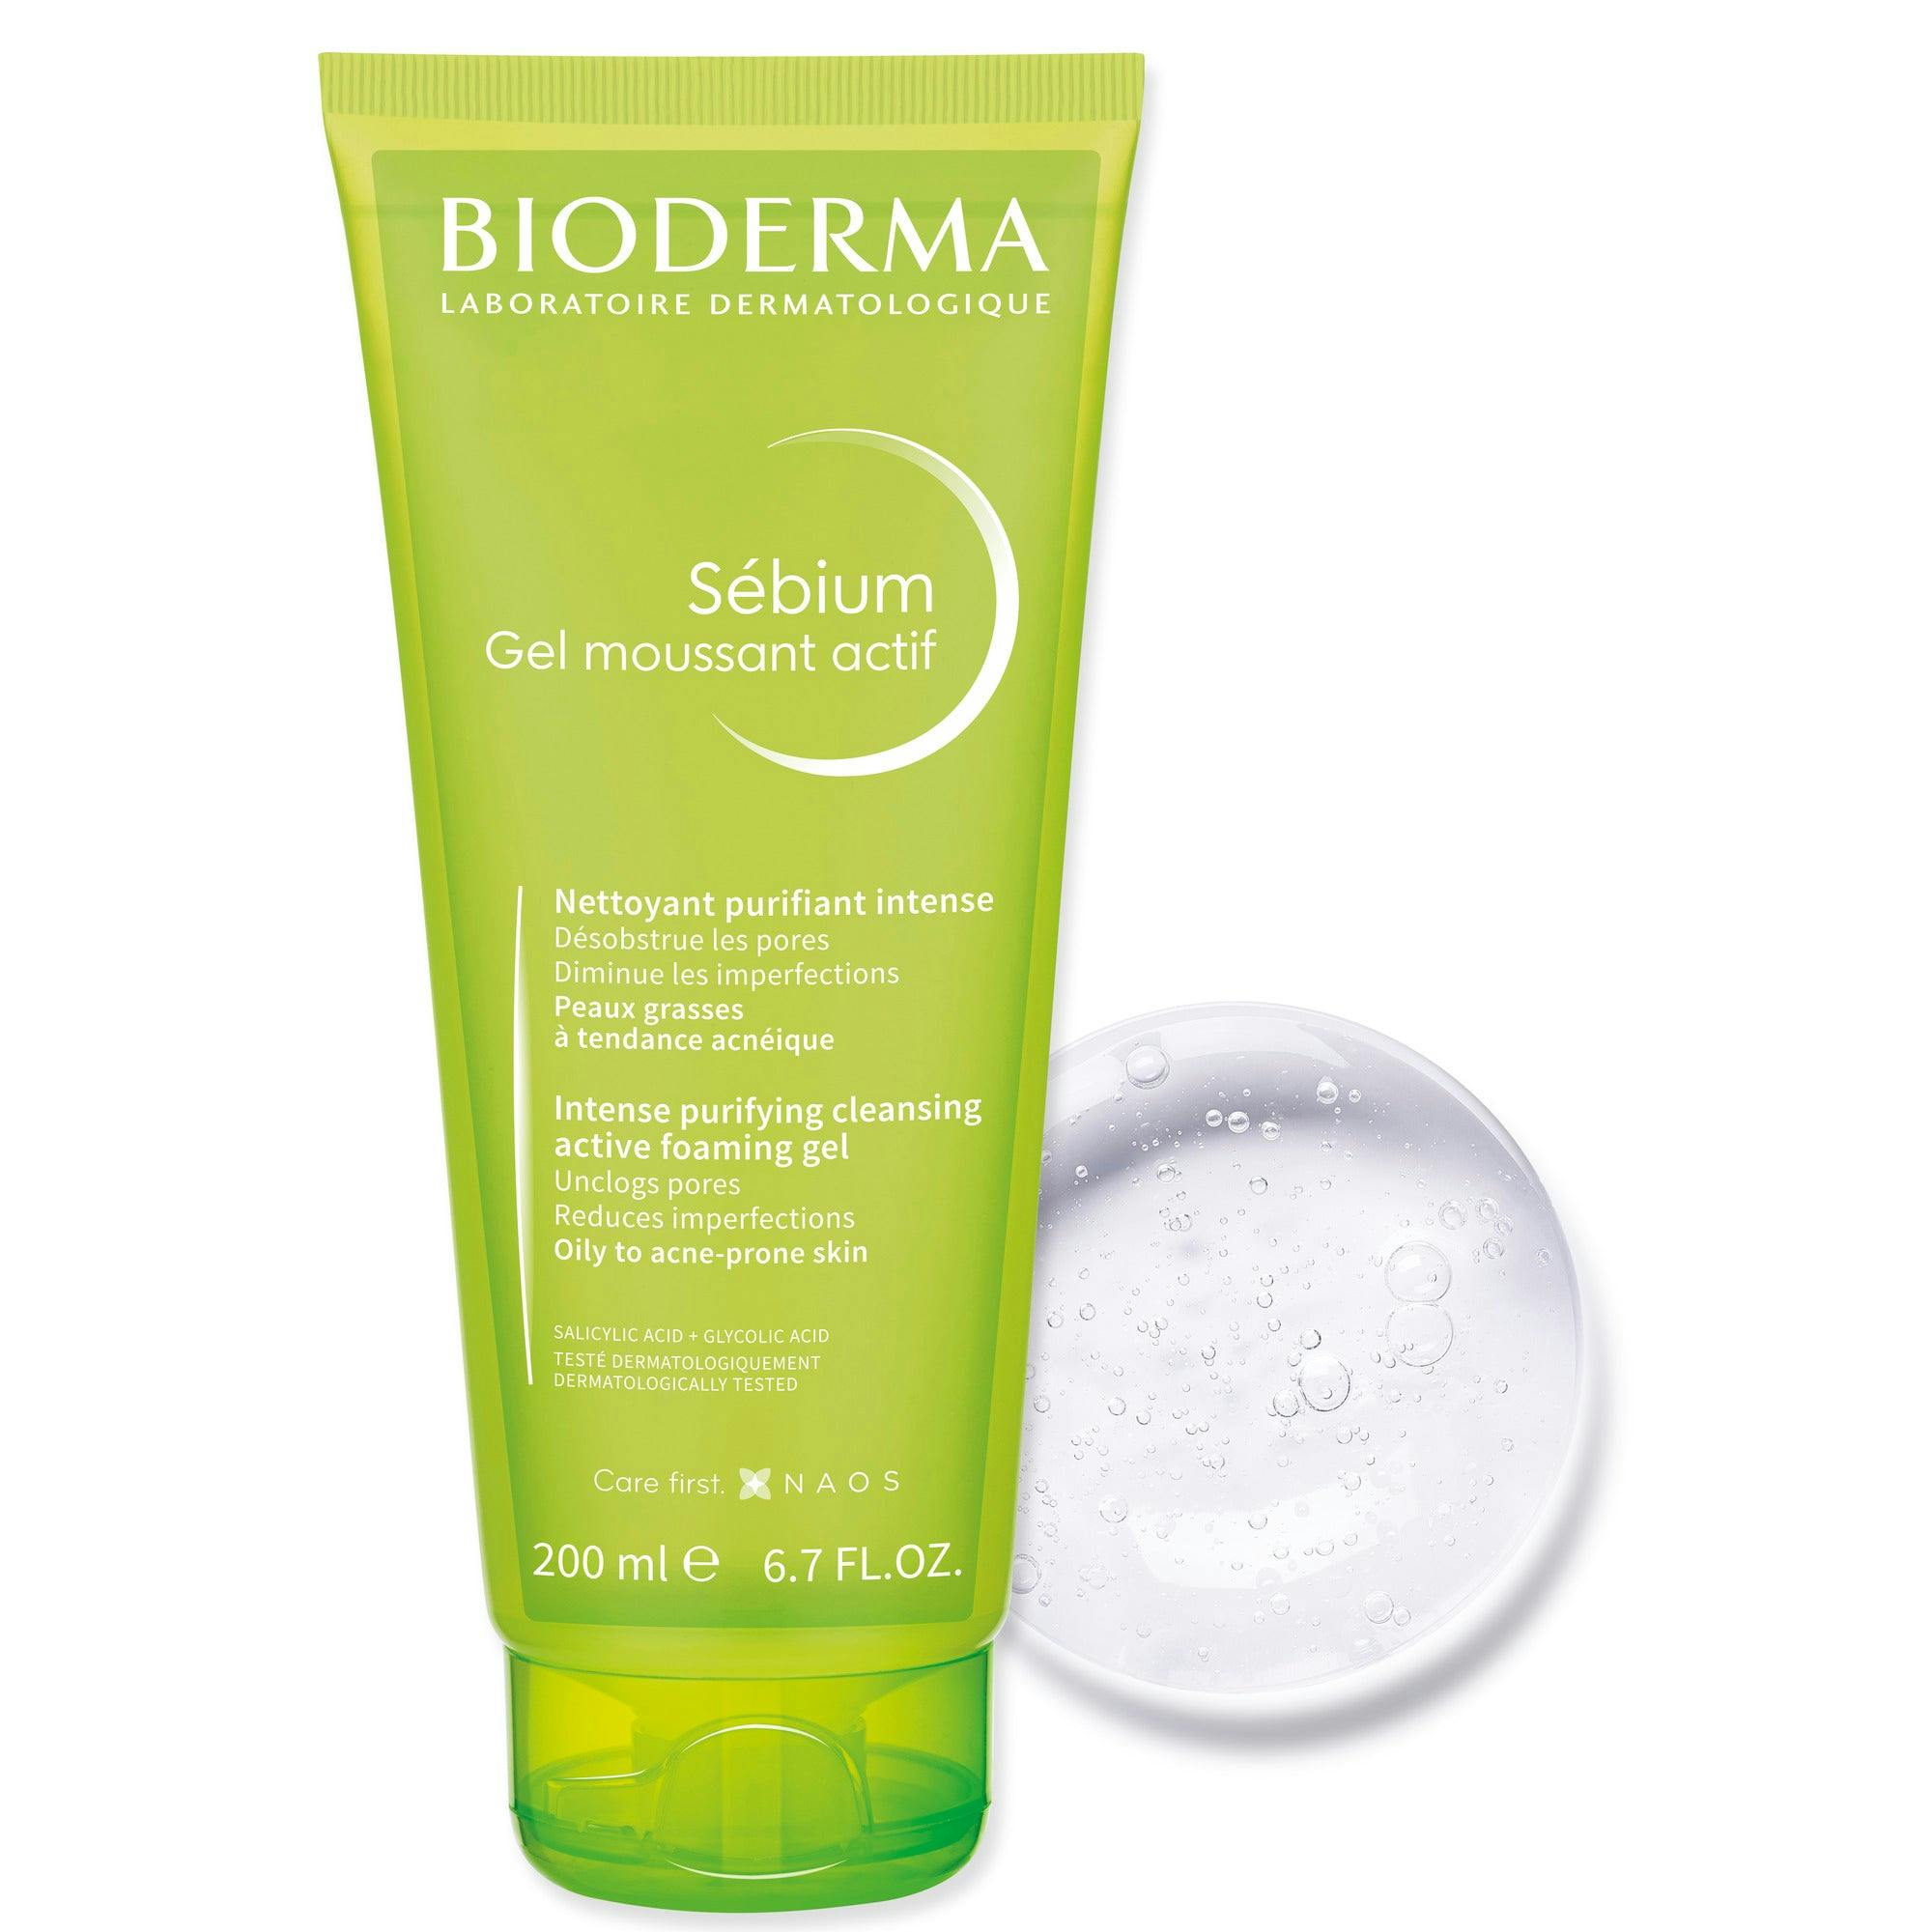 Bioderma Sebium Gel Moussant Actif Anti-Blemish Gel Cleanser for Acne-Prone Skin 200ml